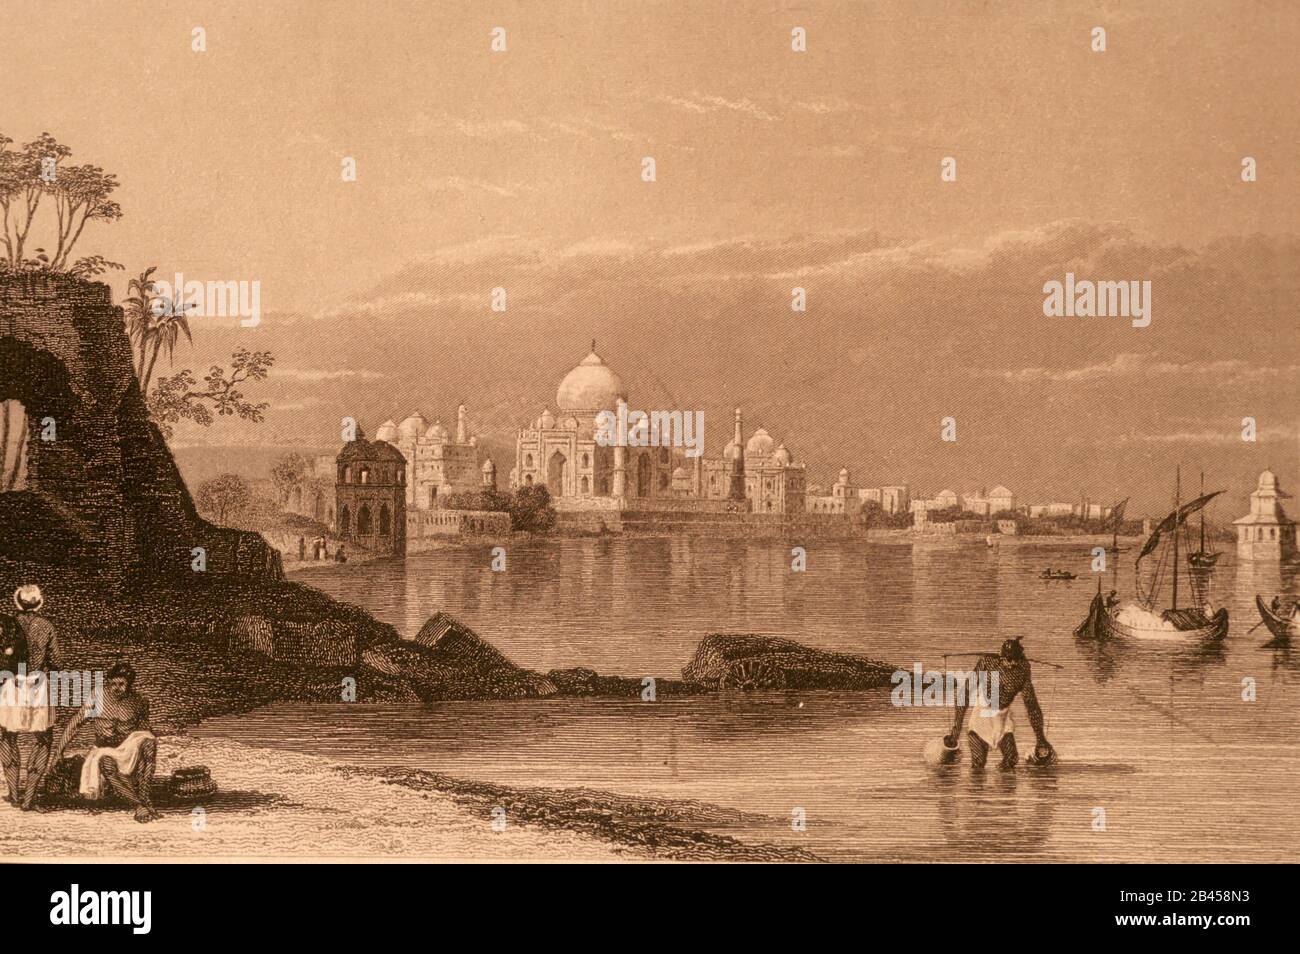 Taj Mahal, Agra, Uttar Pradesh, India, Asia, old vintage 1800s engraving Stock Photo